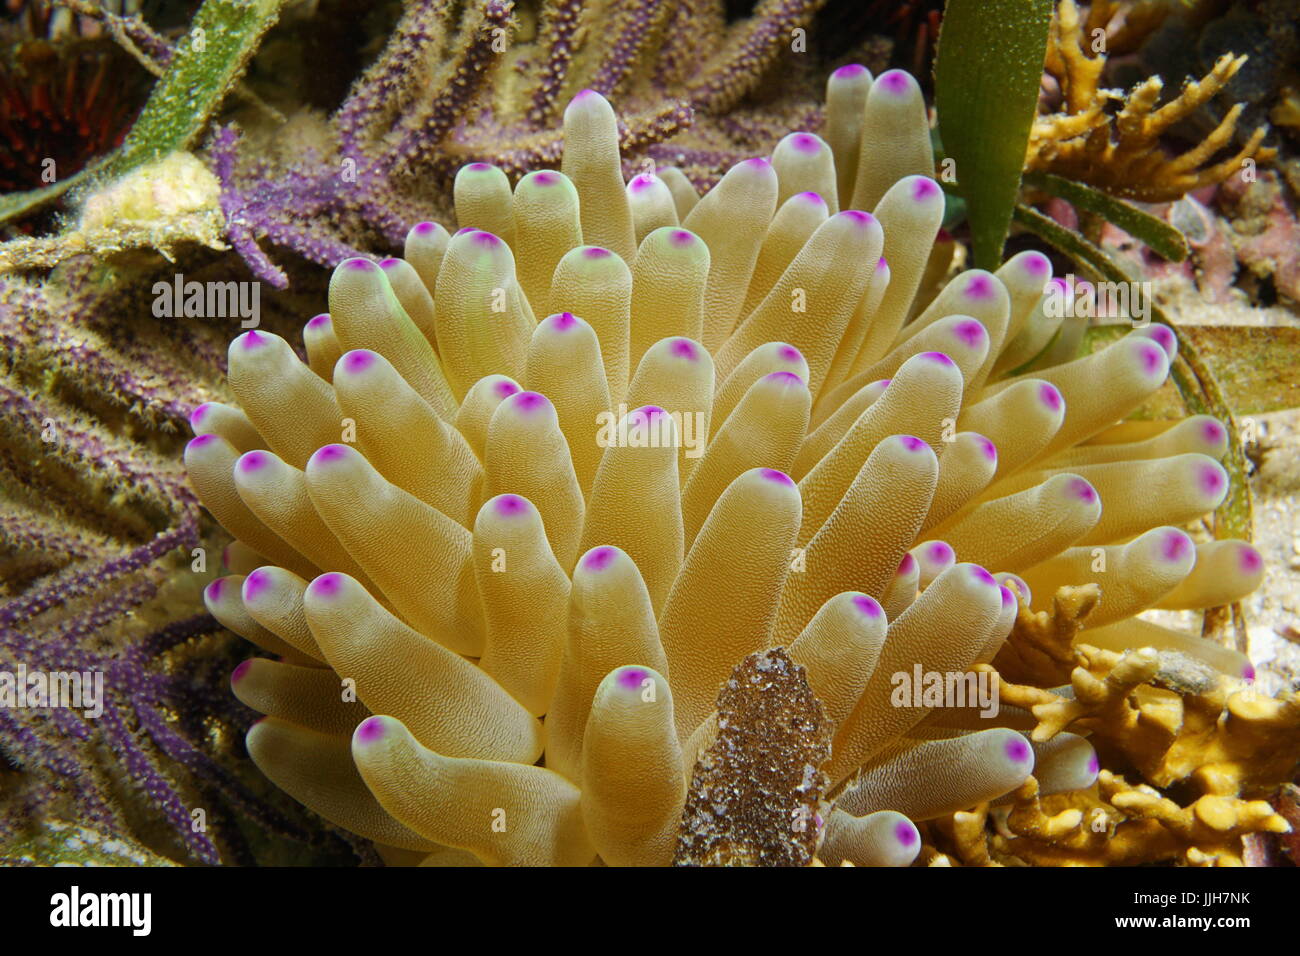 Close up of sea anemone tentacles, Condylactis gigantea, underwater in the Caribbean sea, Costa Rica Stock Photo